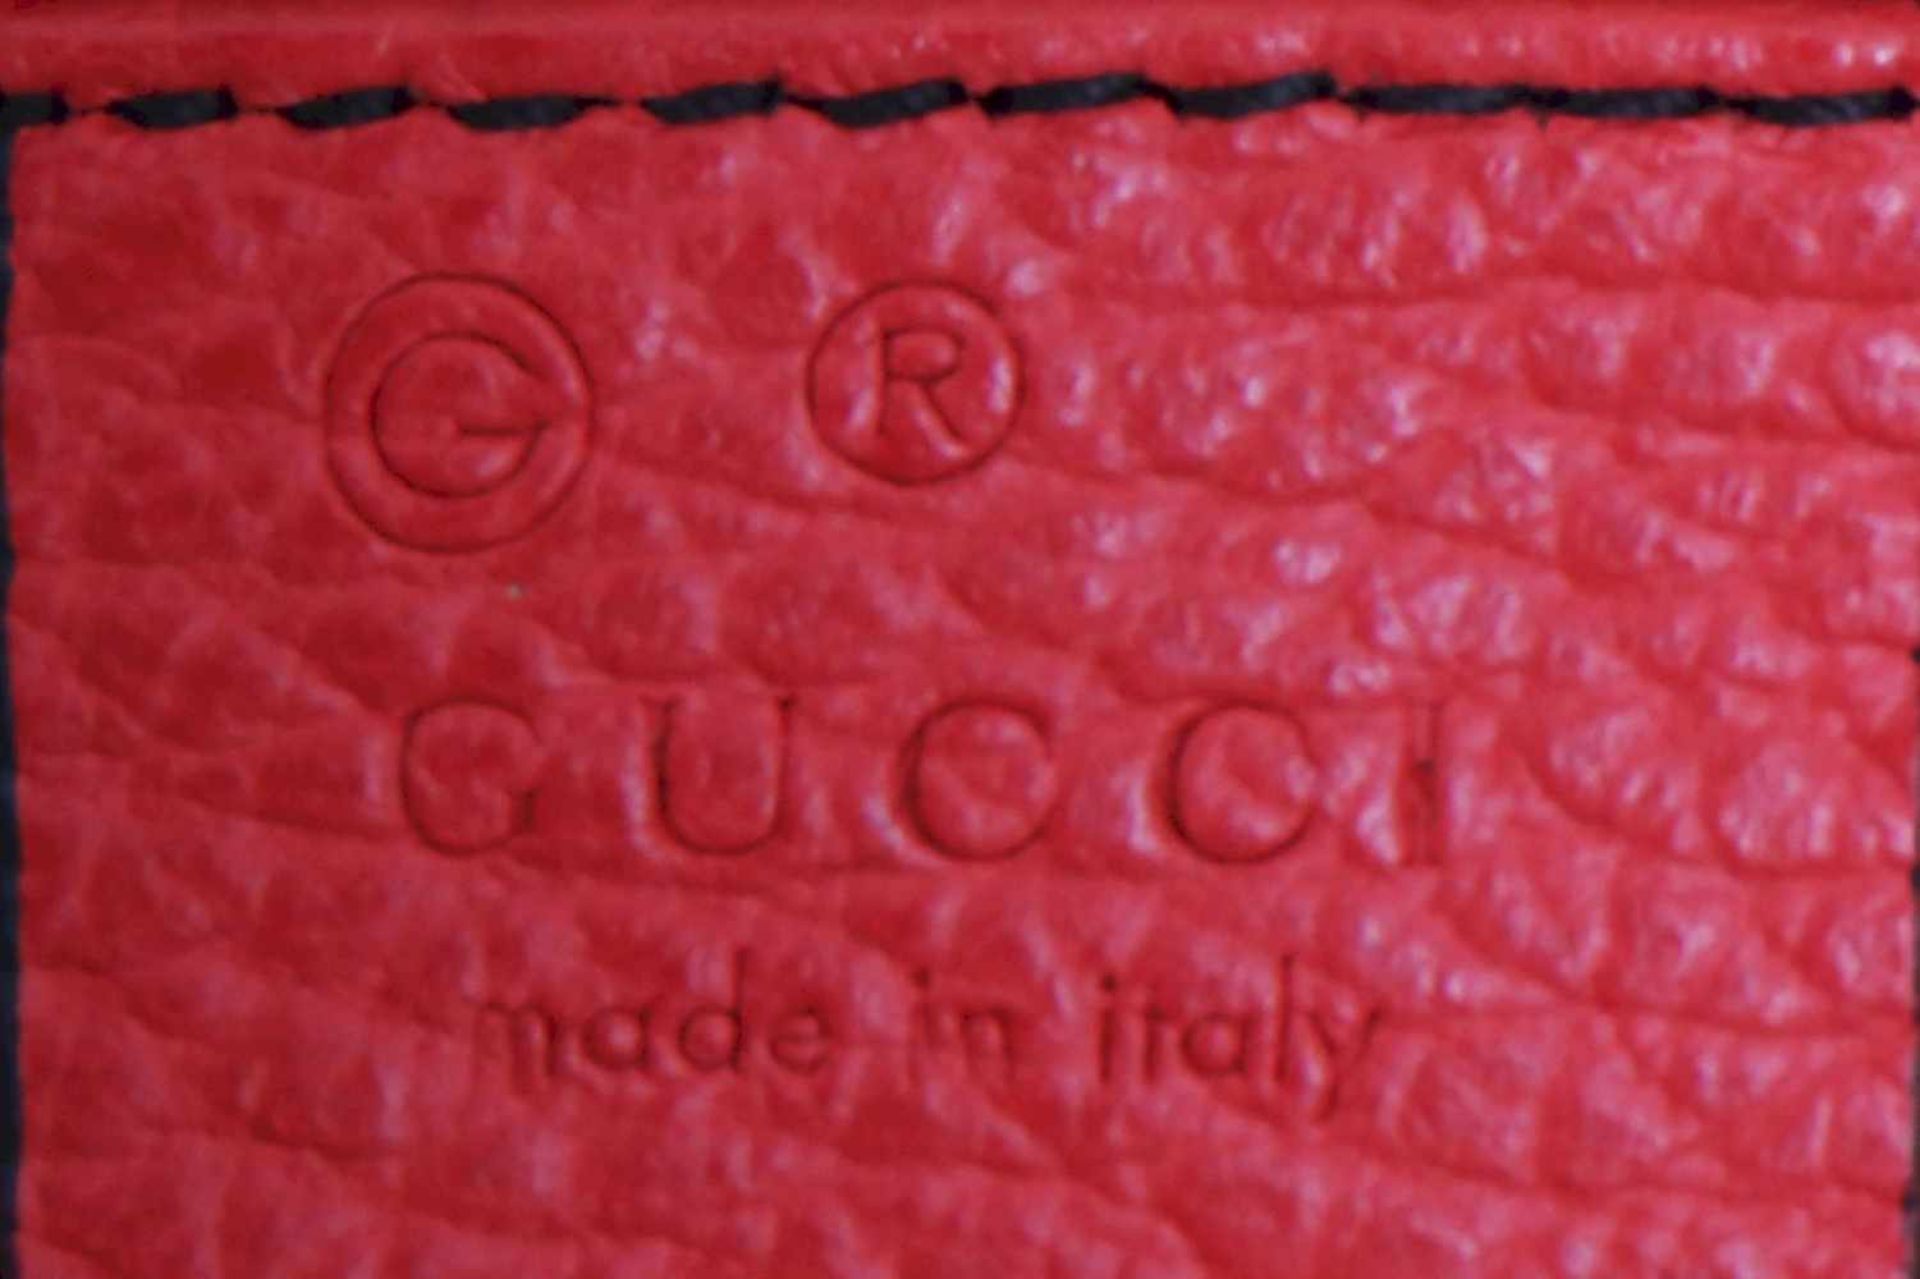 GUCCI Handtasche korallenrotes Leder, rechteckige Form mit 2 kurzen Tragehenkeln, 1 langer ( - Image 5 of 5